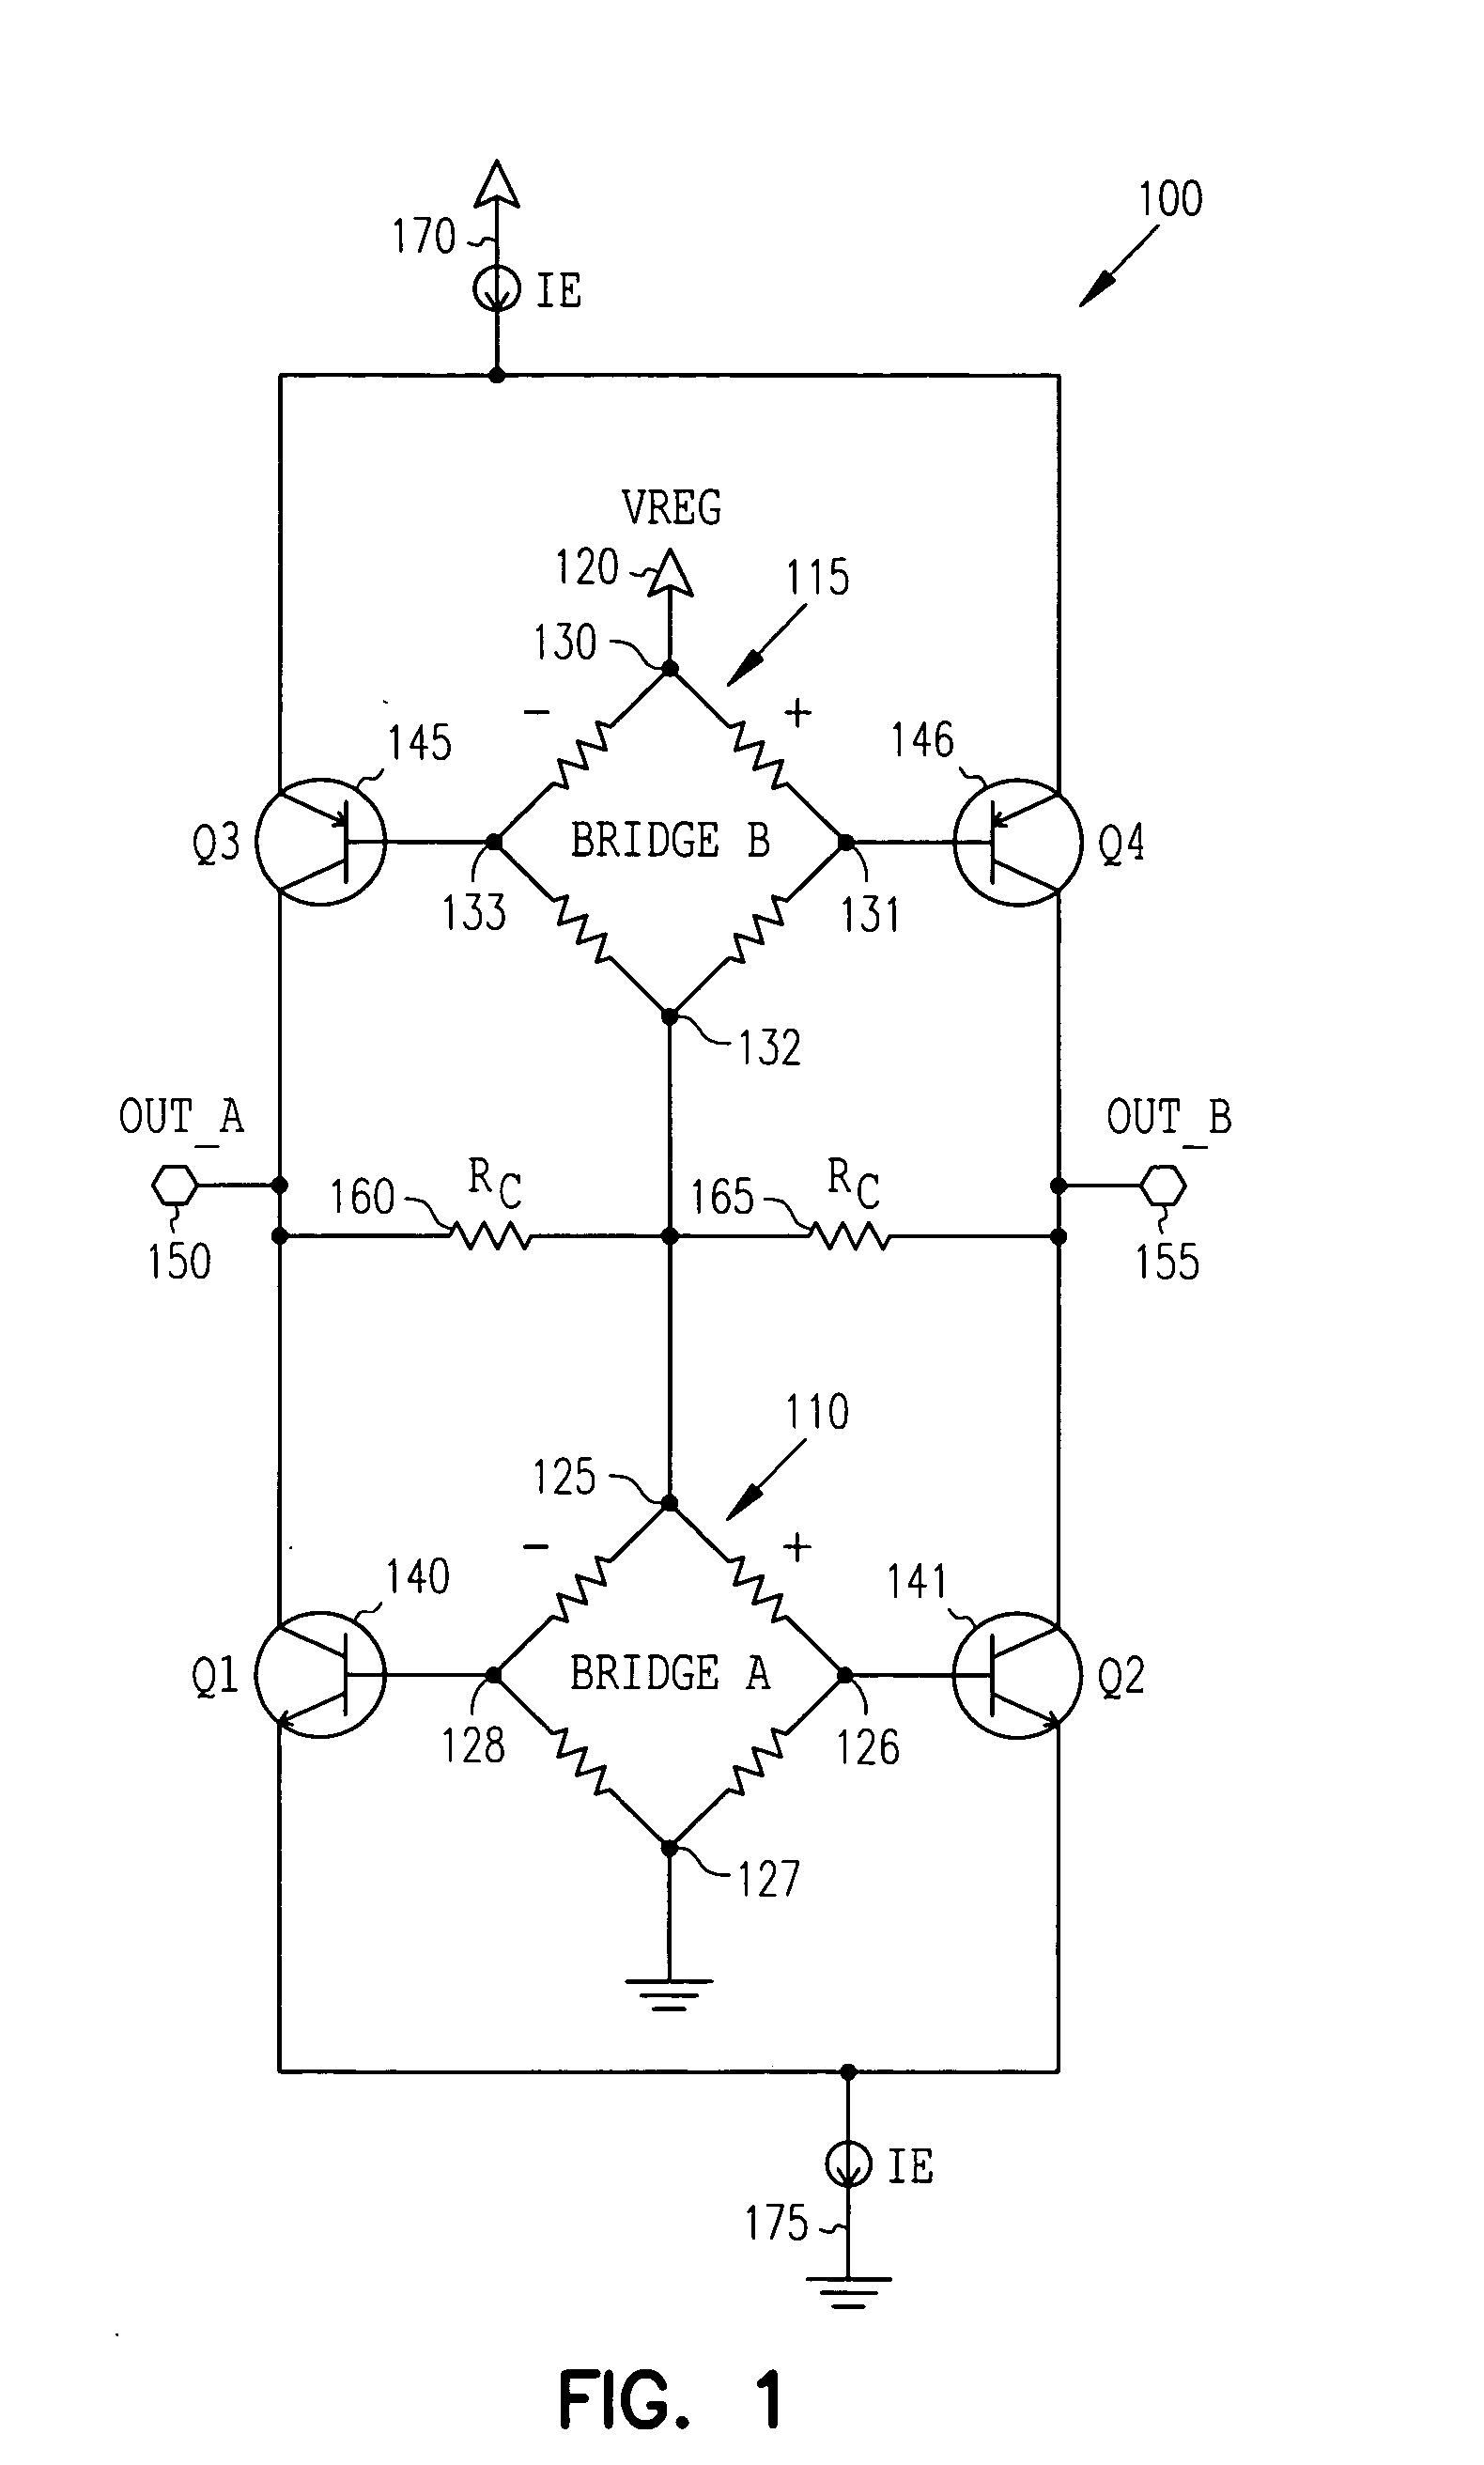 Series bridge circuit